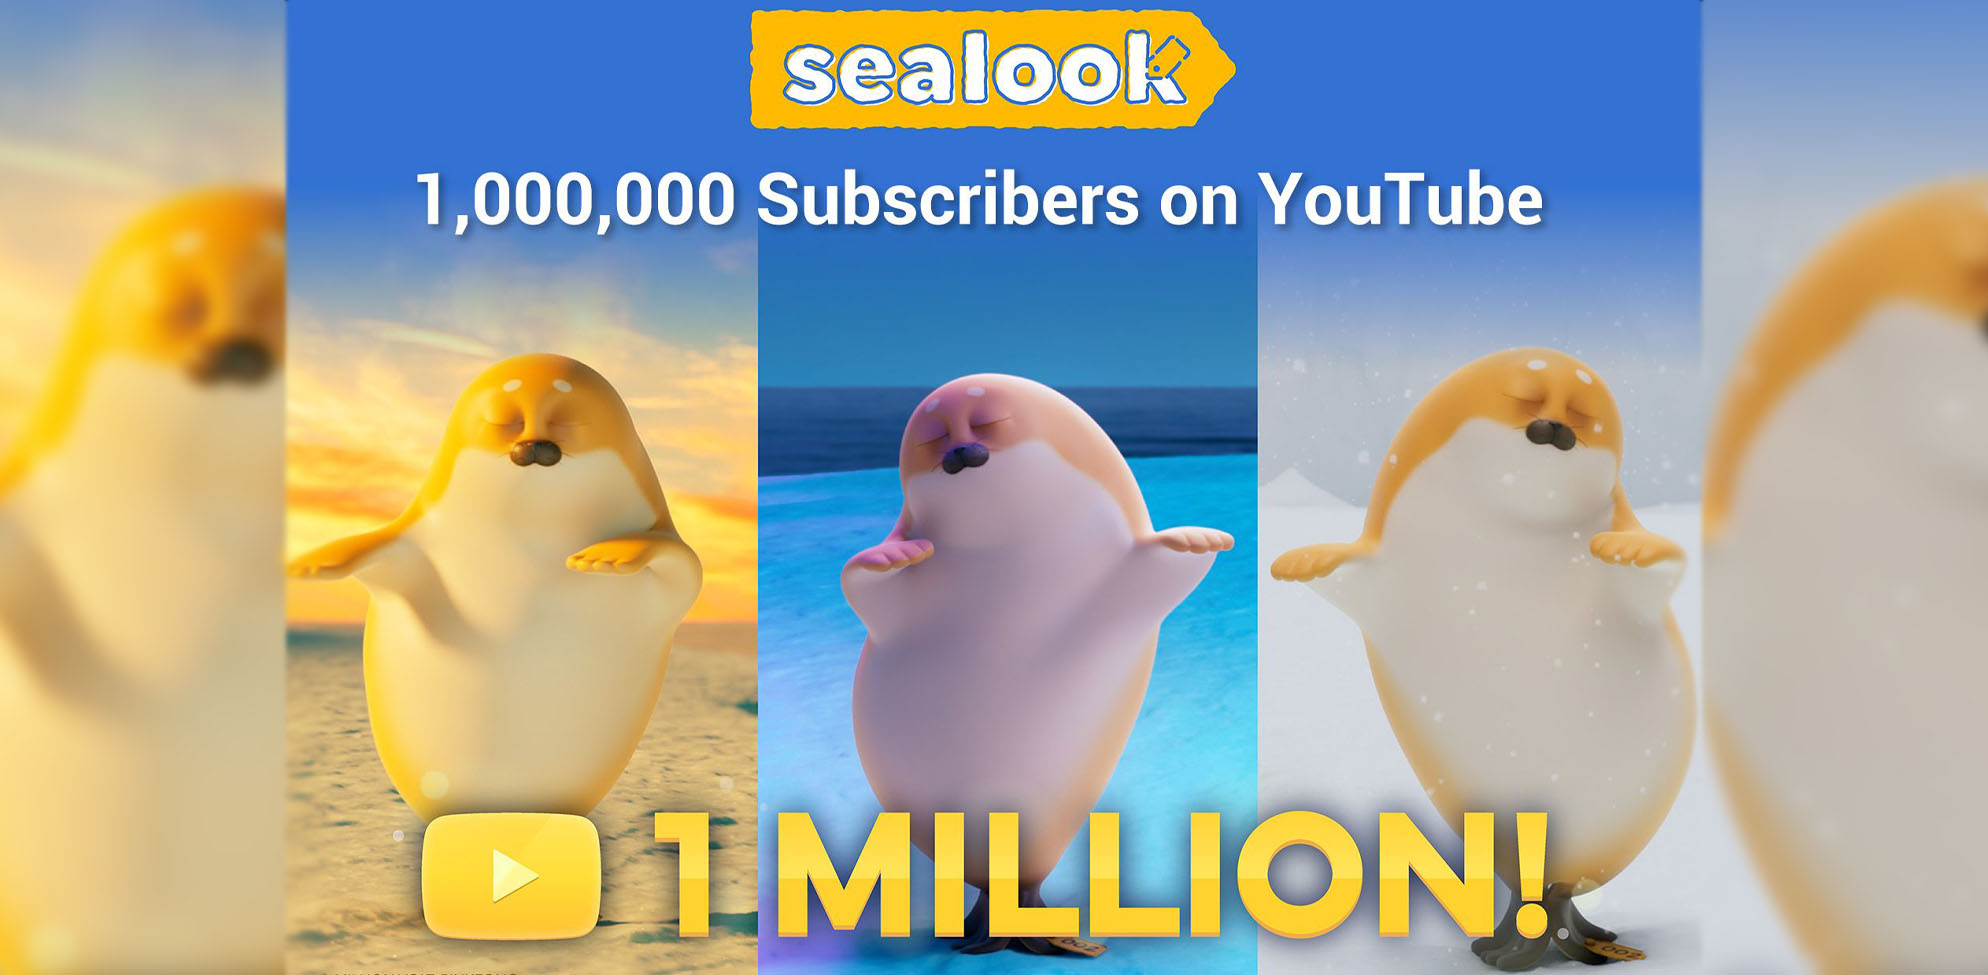 SEALOOK Surpasses 1 Million Subscribers on YouTube image